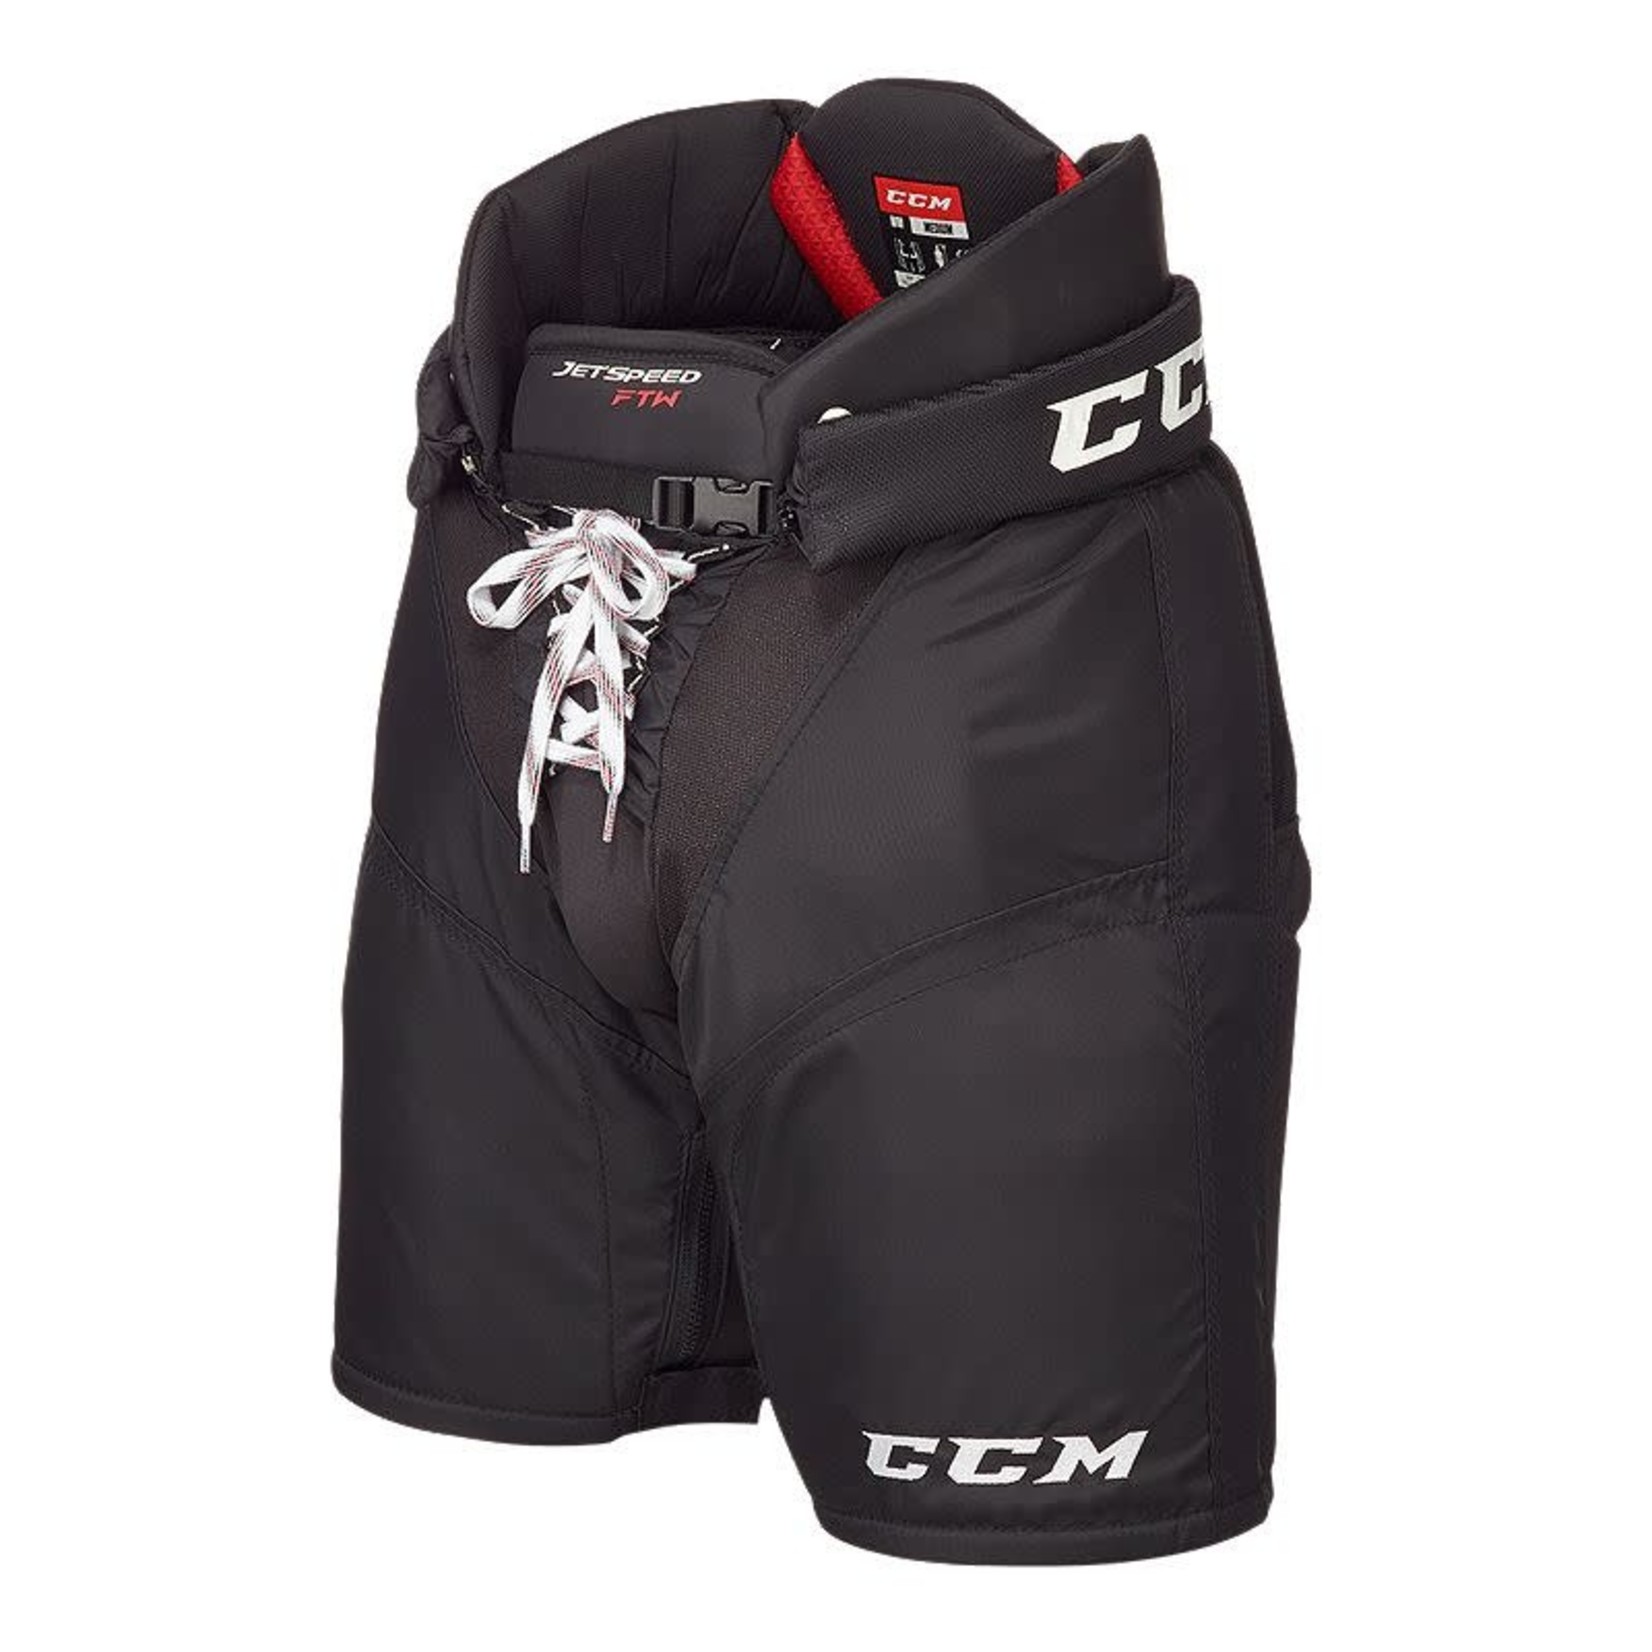 CCM CCM Hockey Pants, Jetspeed FTW, Ladies